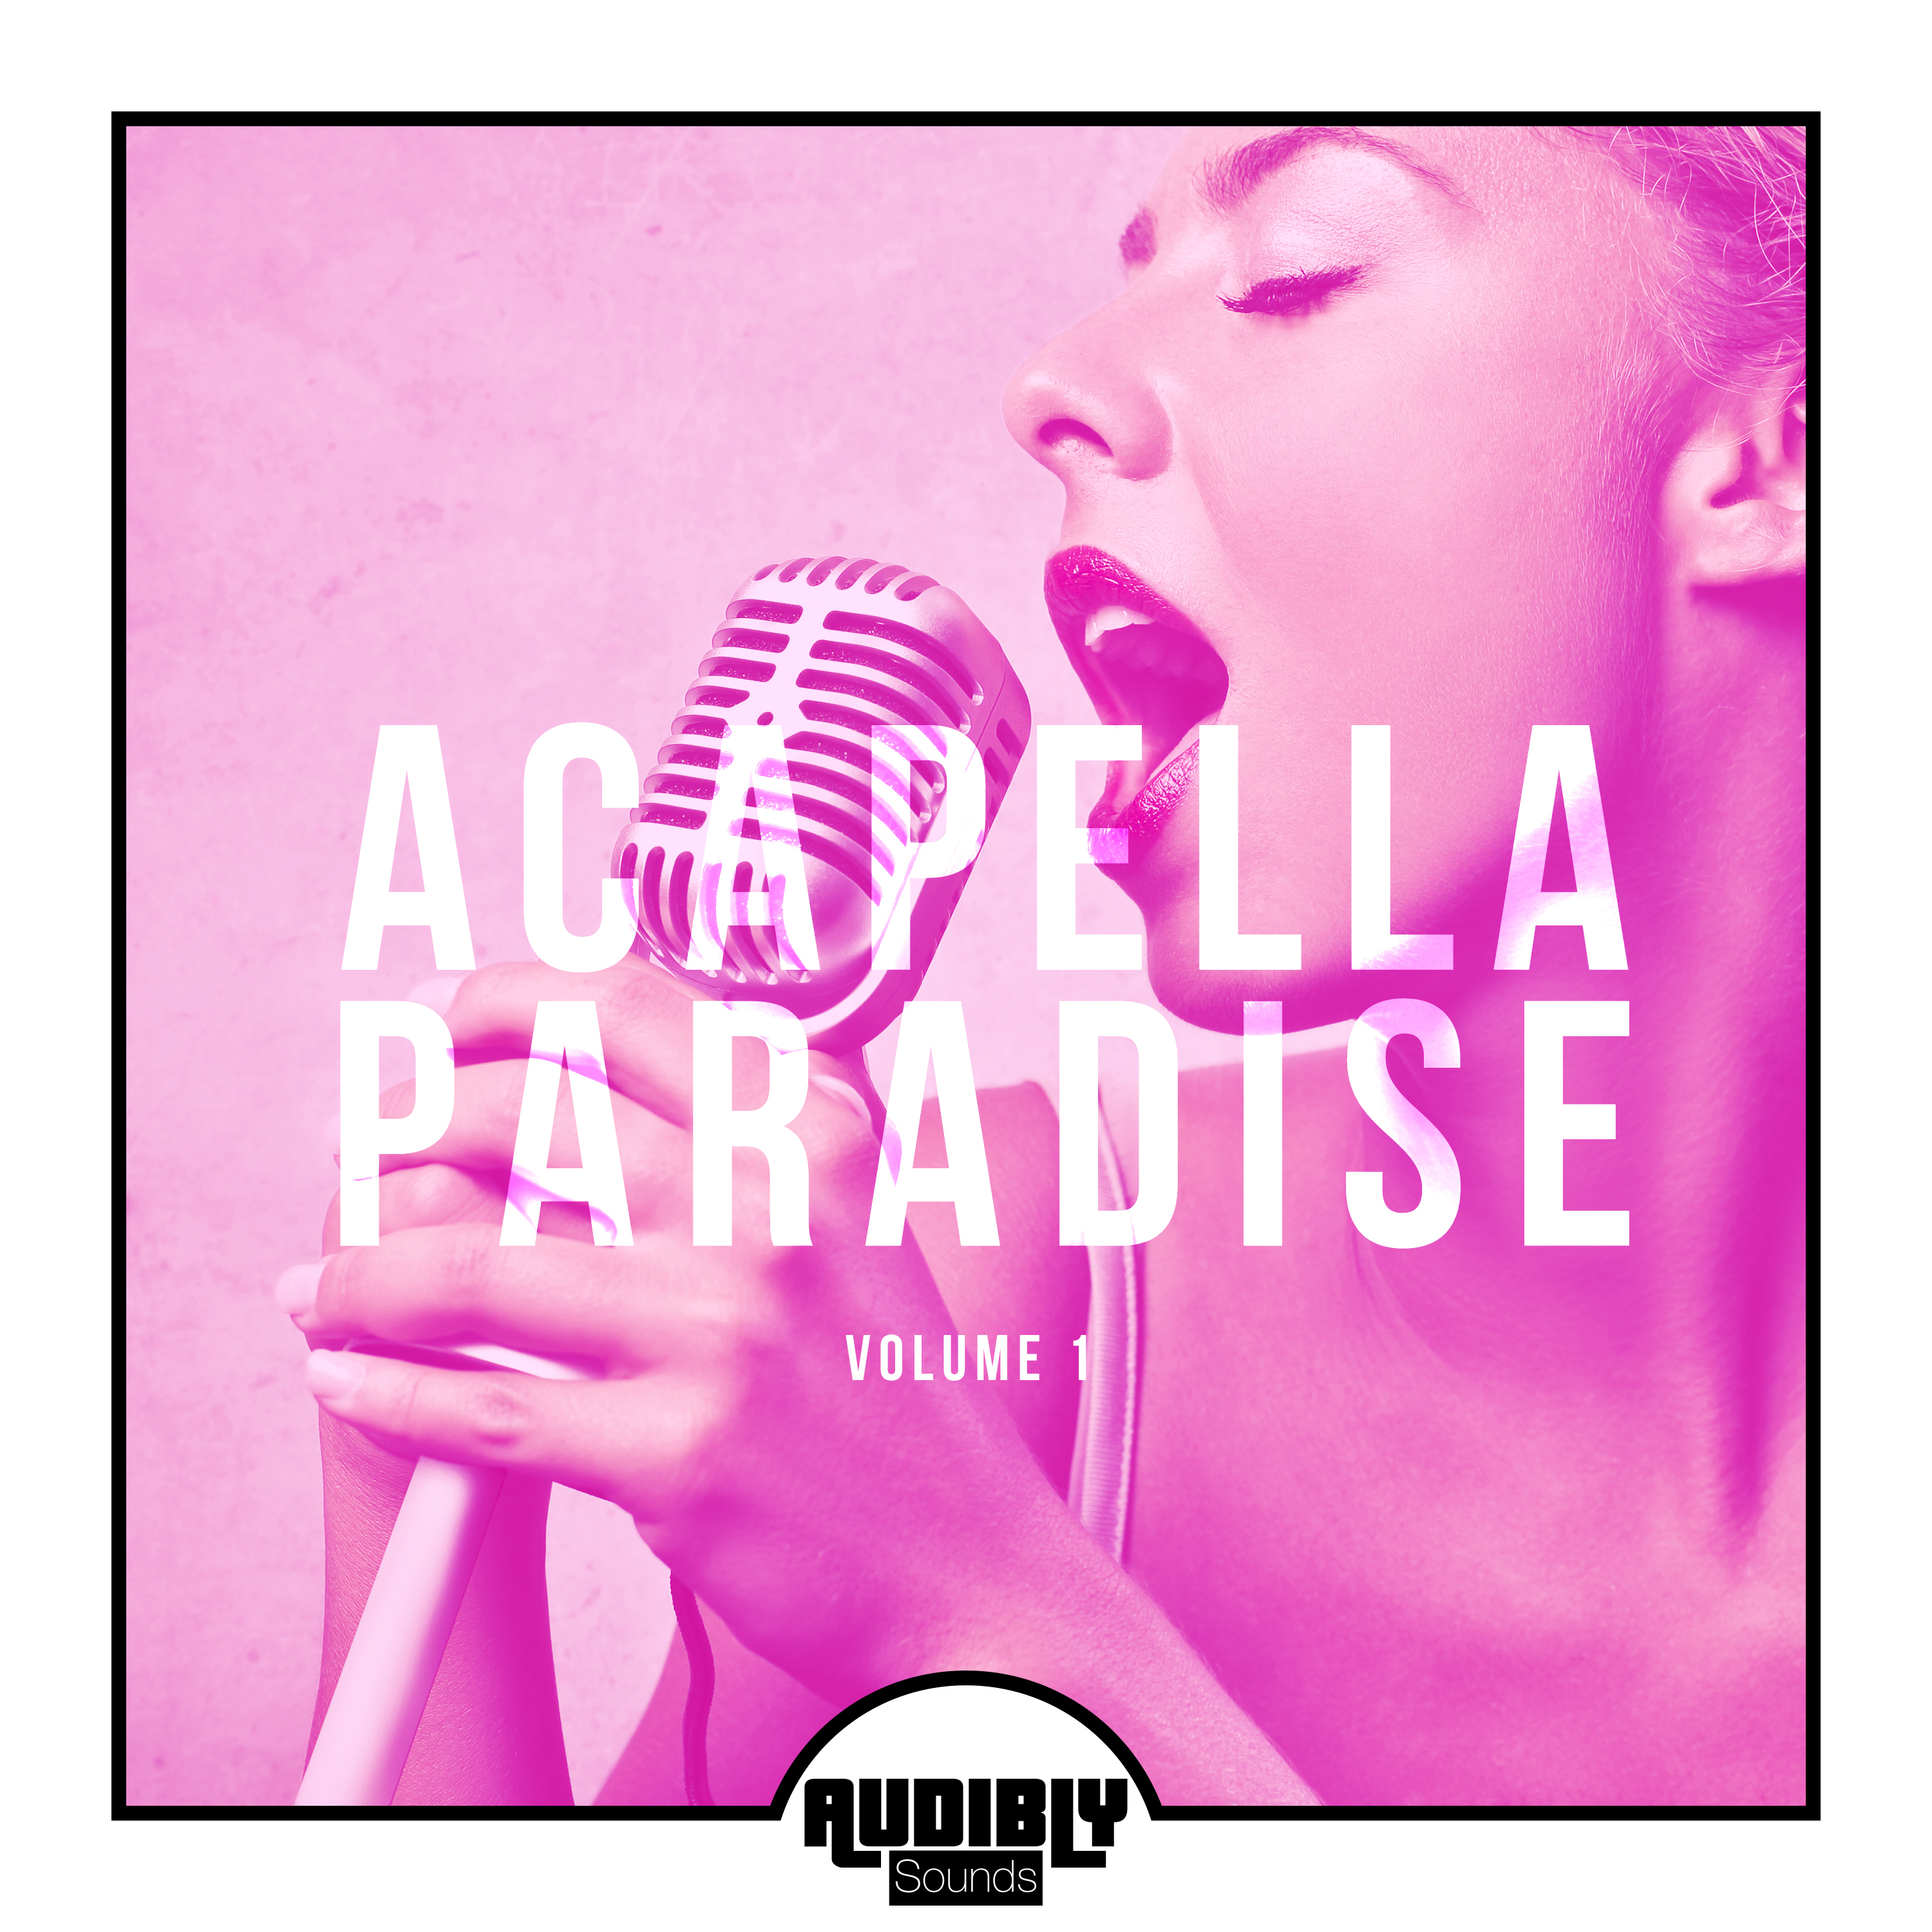 A Good Time (Acapella) [Feat. Midnite Fellas]